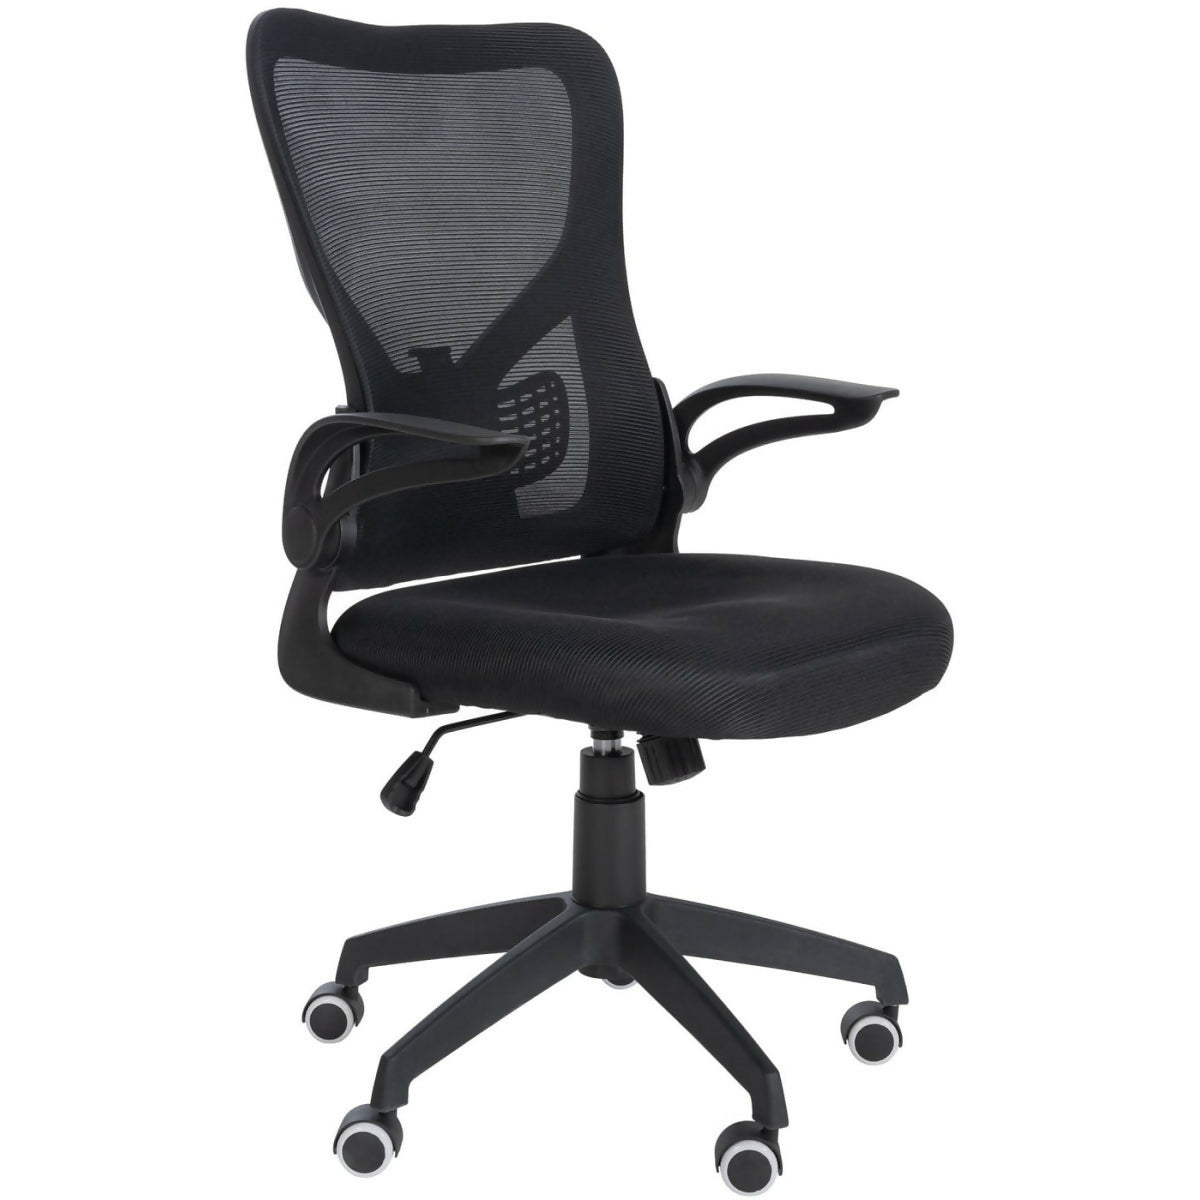 Hudson office chair - Black fabric